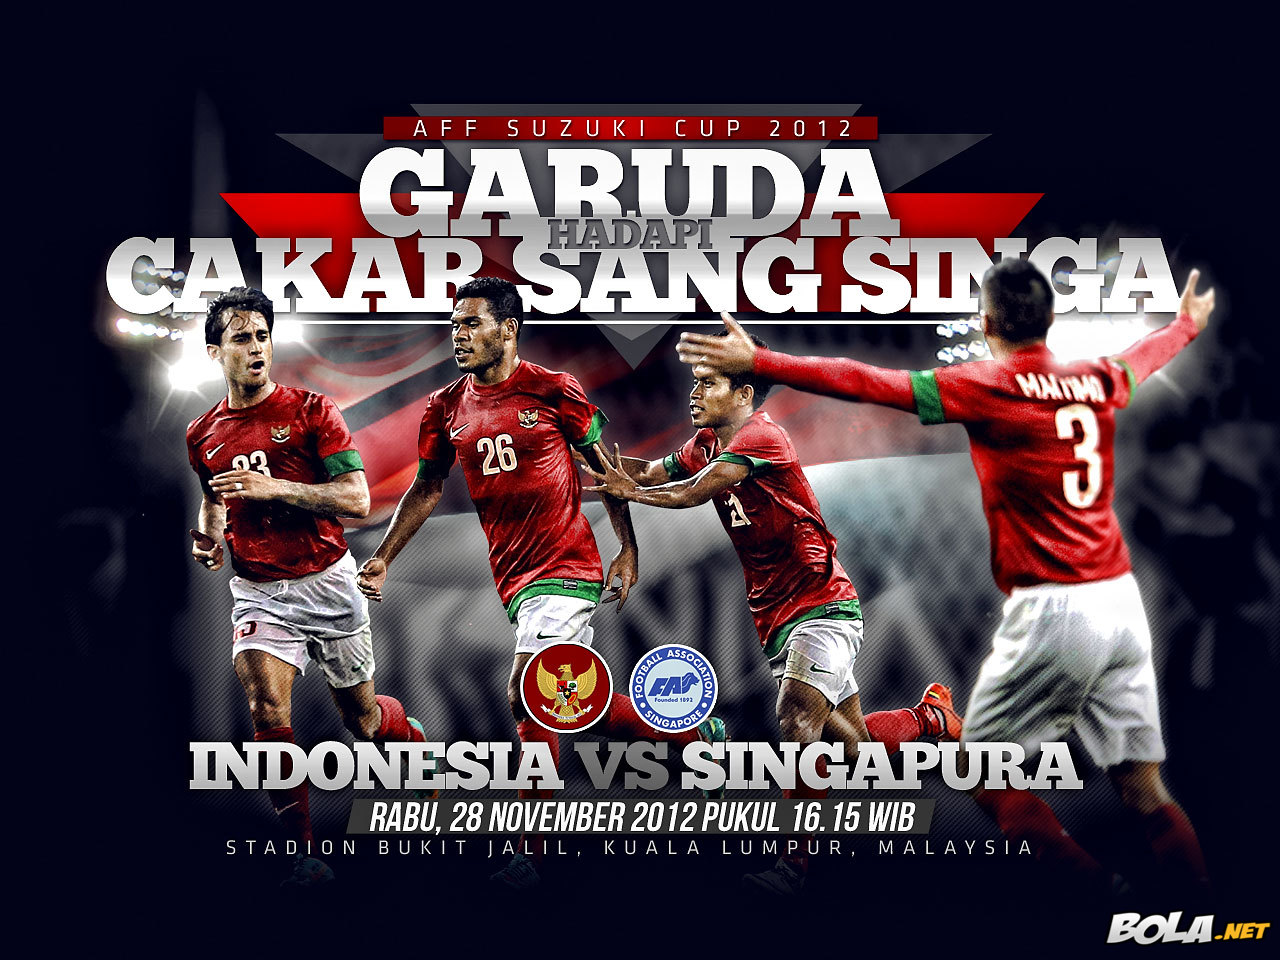 Deskripsi : Wallpaper Aff Cup: Indonesia Vs Singapura, size: 1280x960